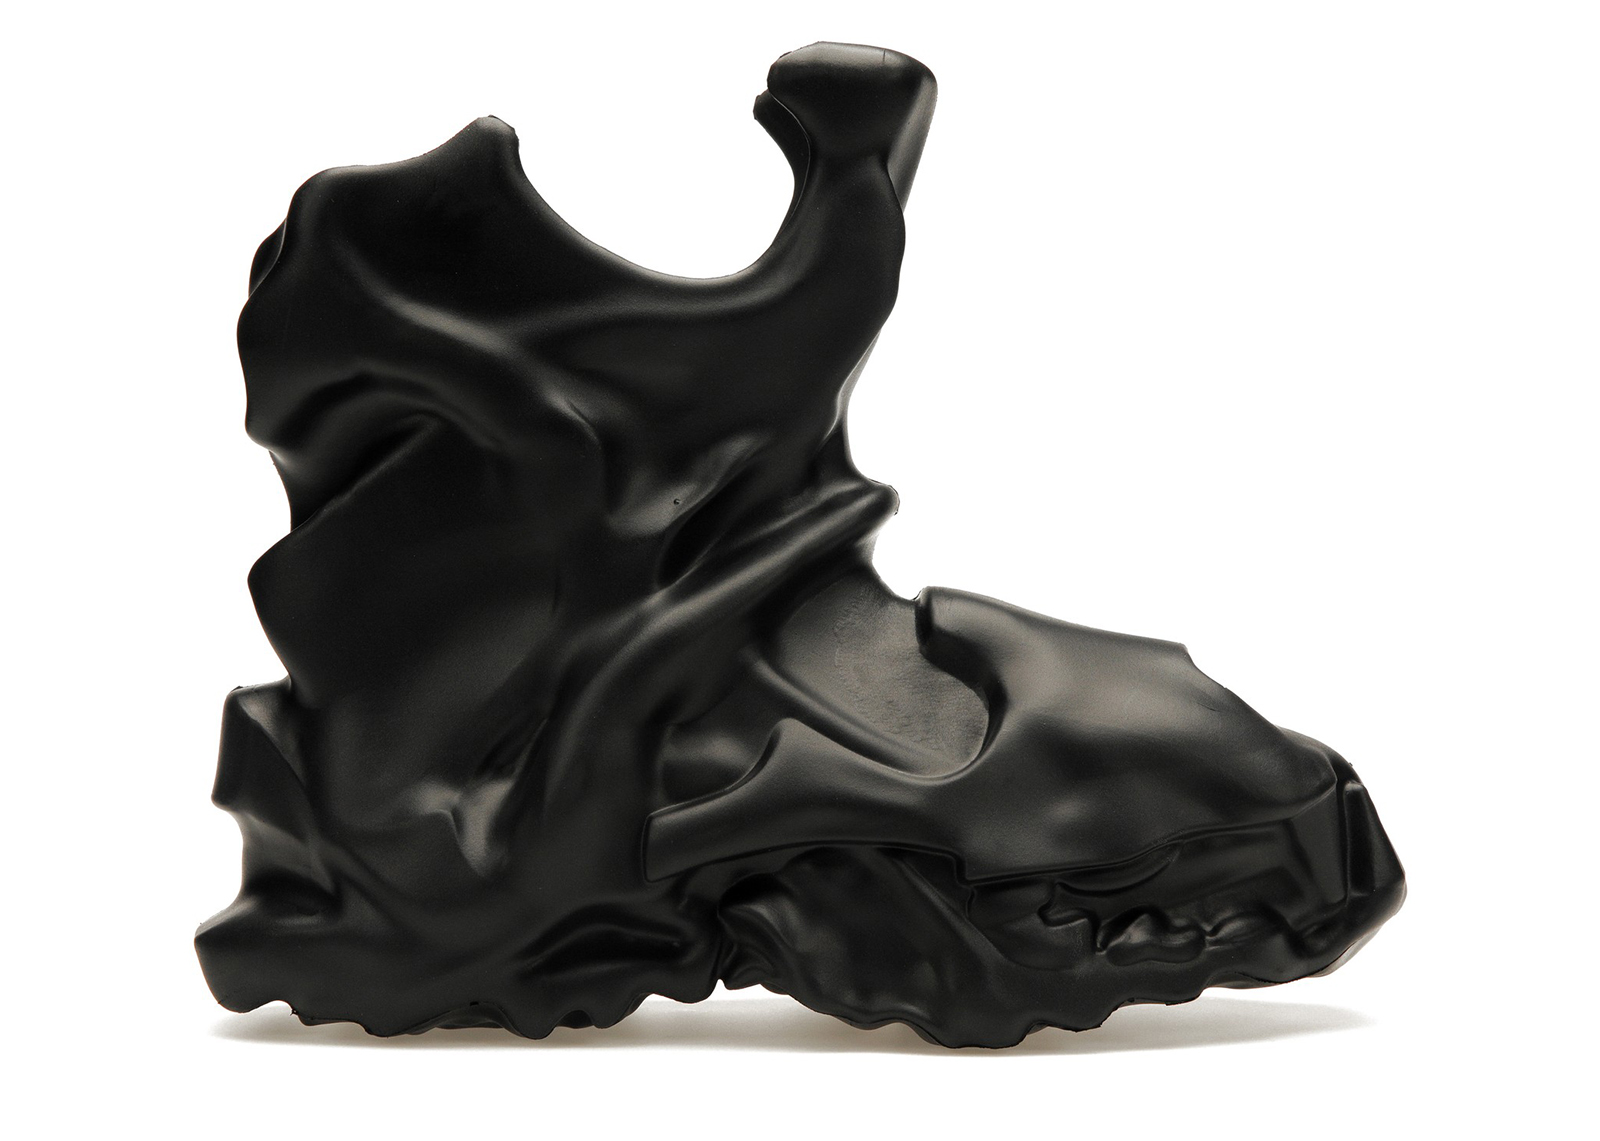 Kito Wares Fossil-X Jag Foam Boot Phosphate Black